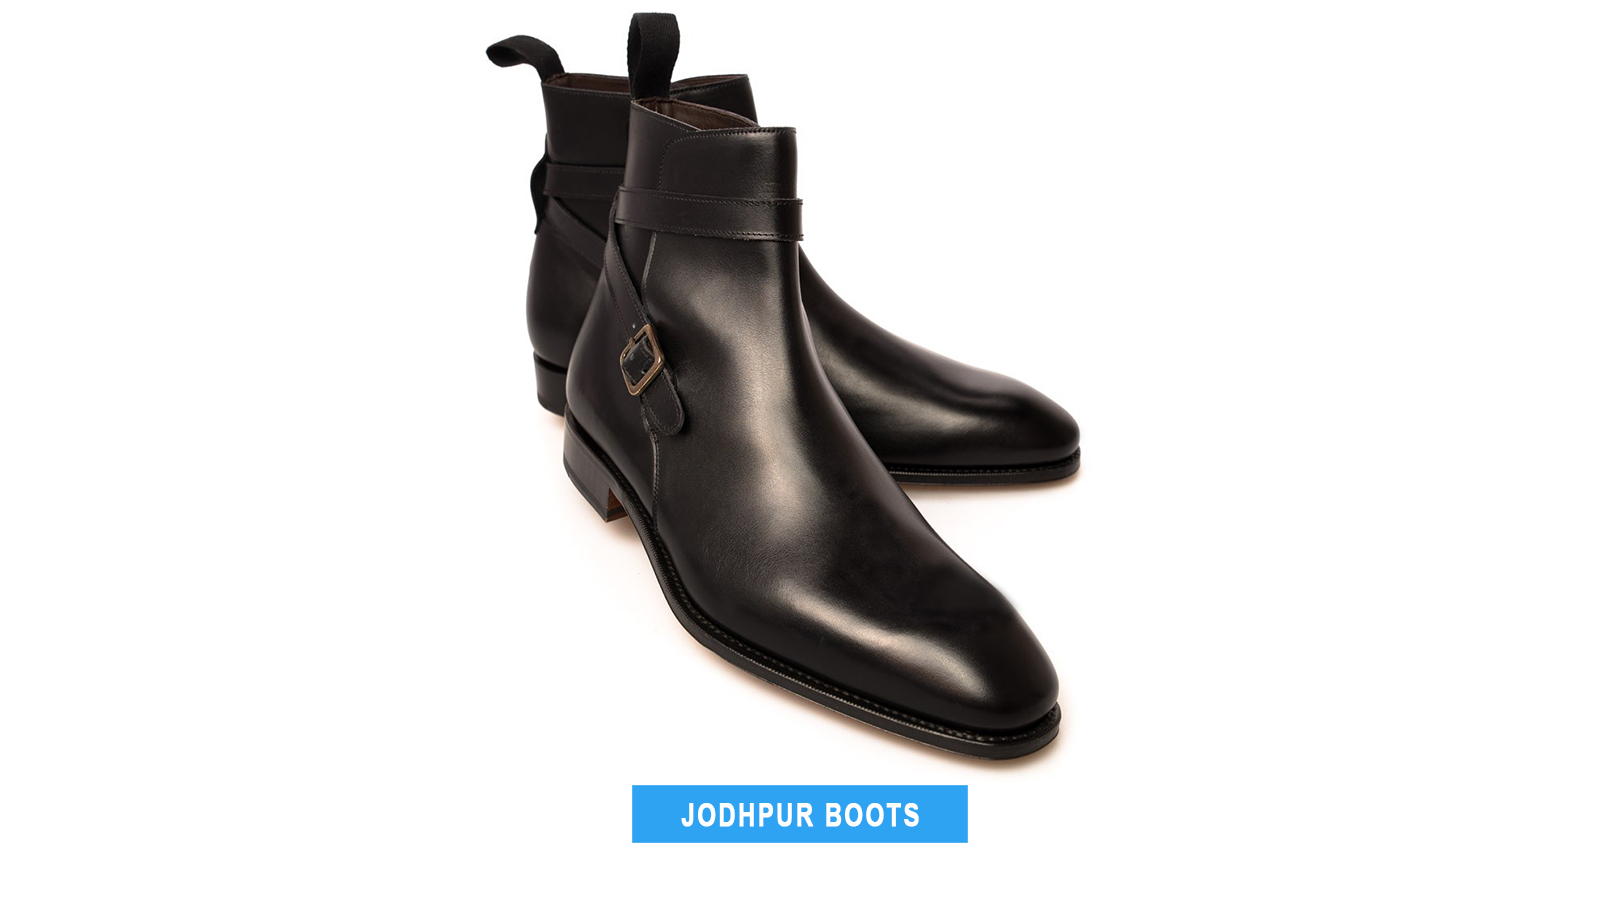 Jodhpur dress boots style for men